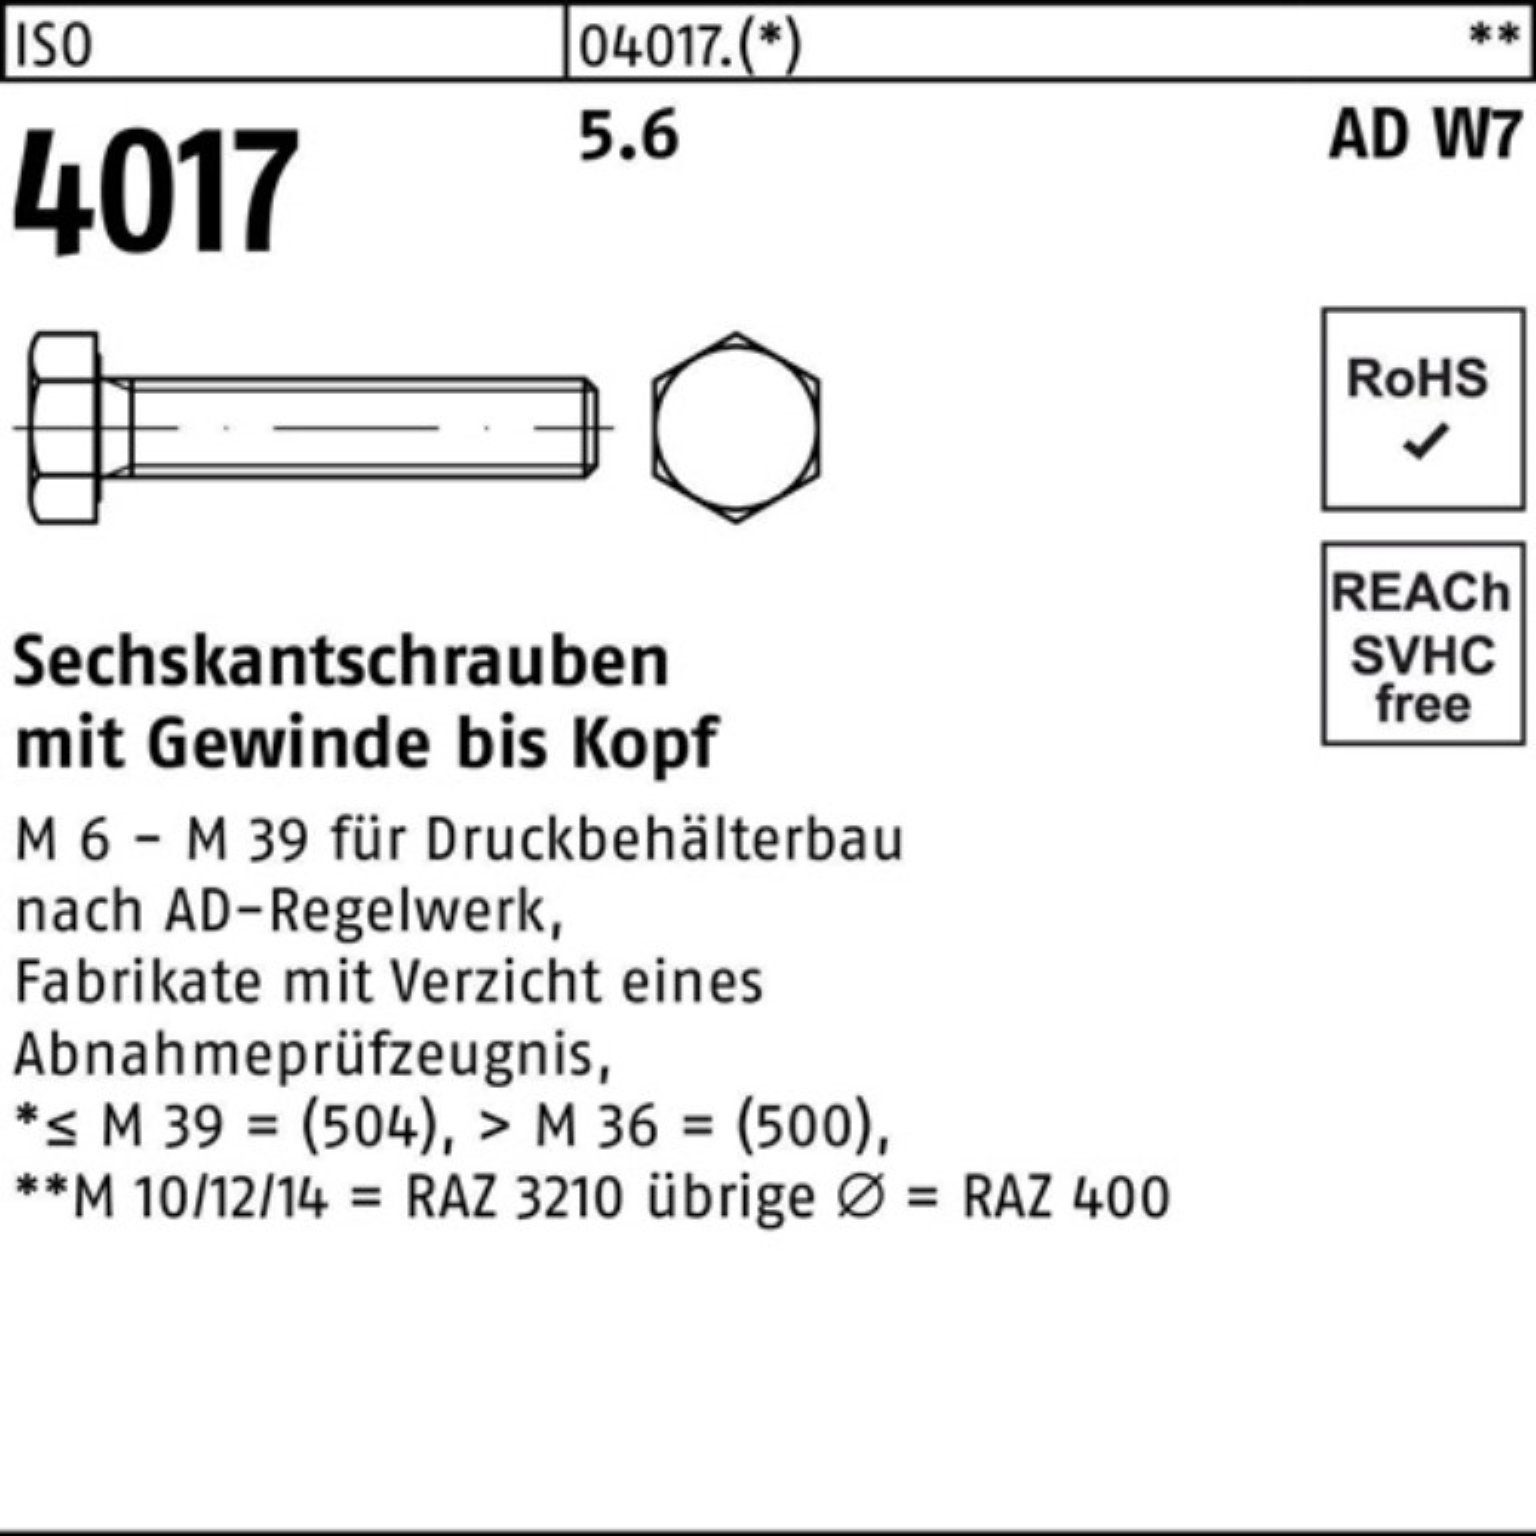 Bufab Sechskantschraube 100er Pack Sechskantschraube ISO 4017 VG M10x 50 5.6 AD W7 100 Stück